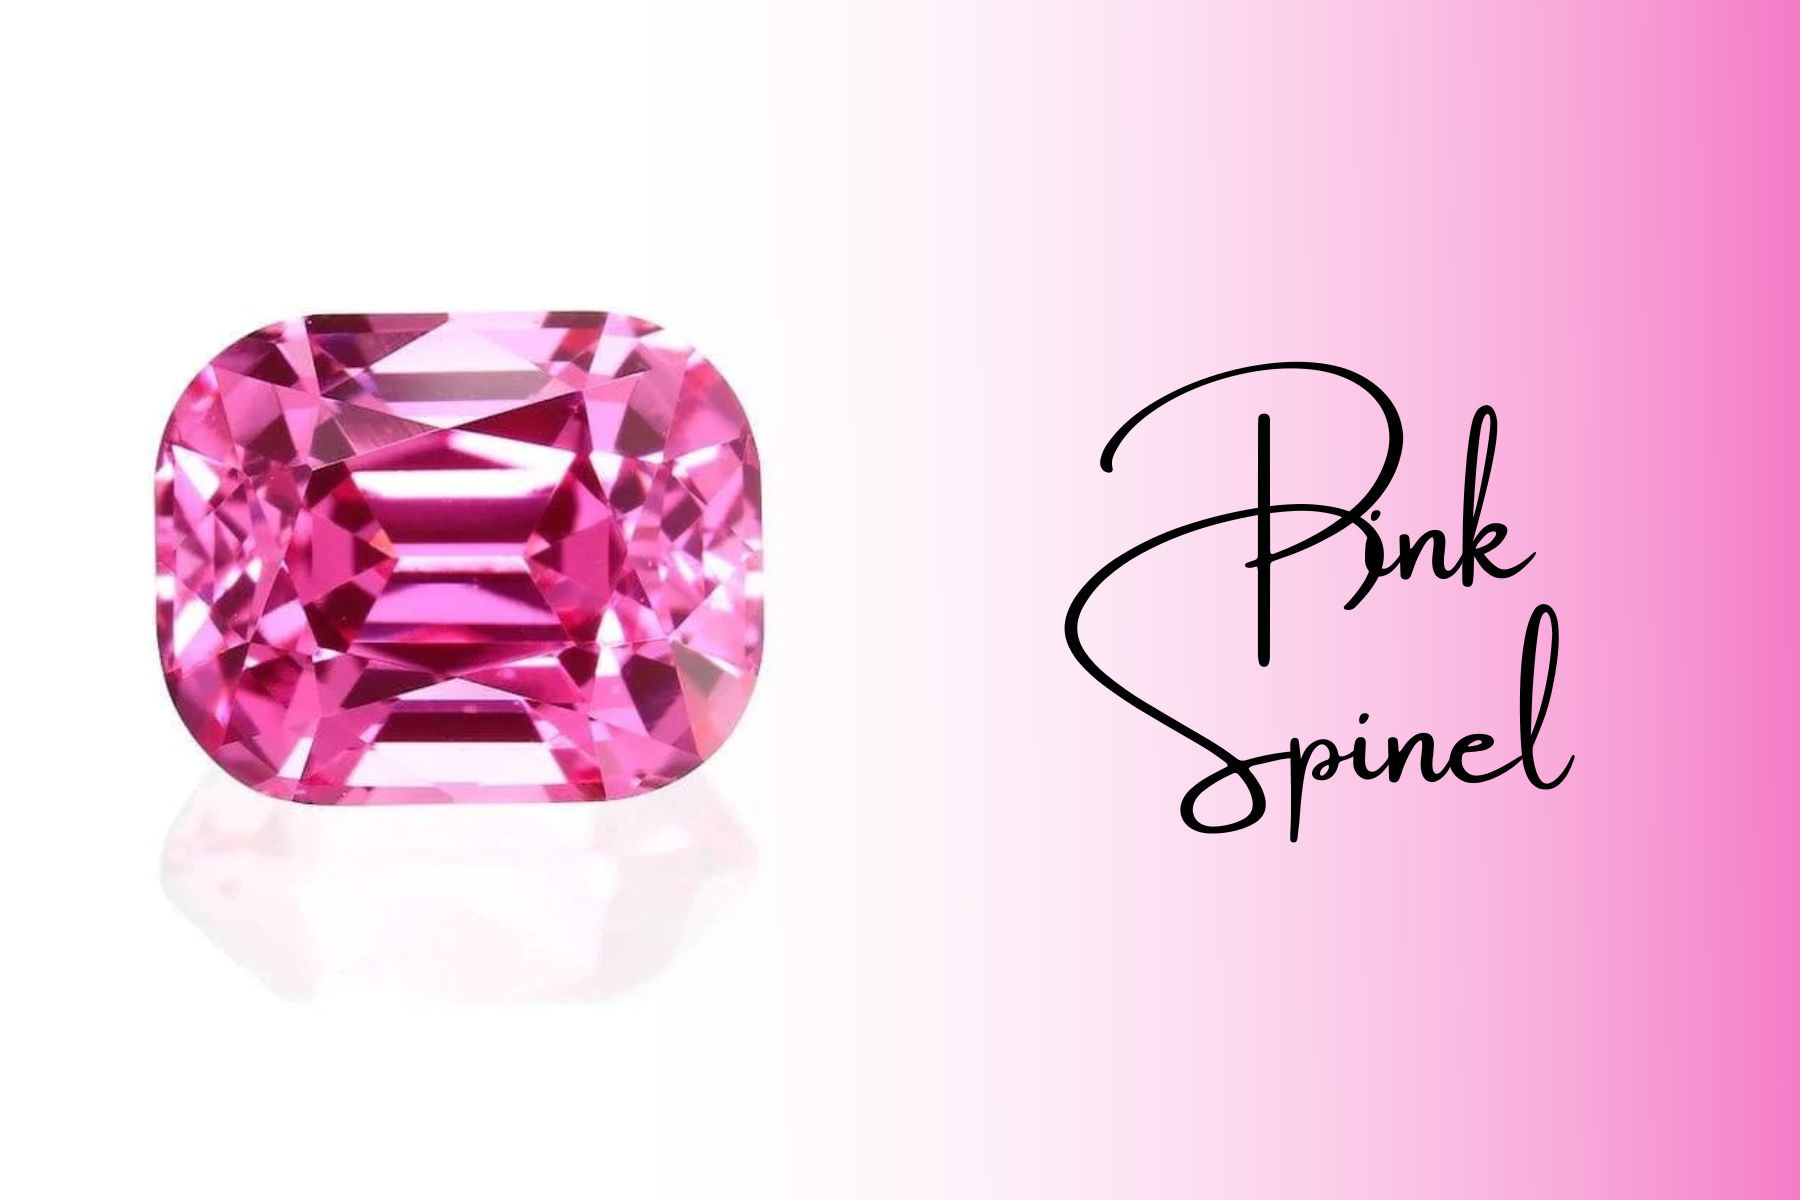 A smooth-cornered rectangular pink spinel